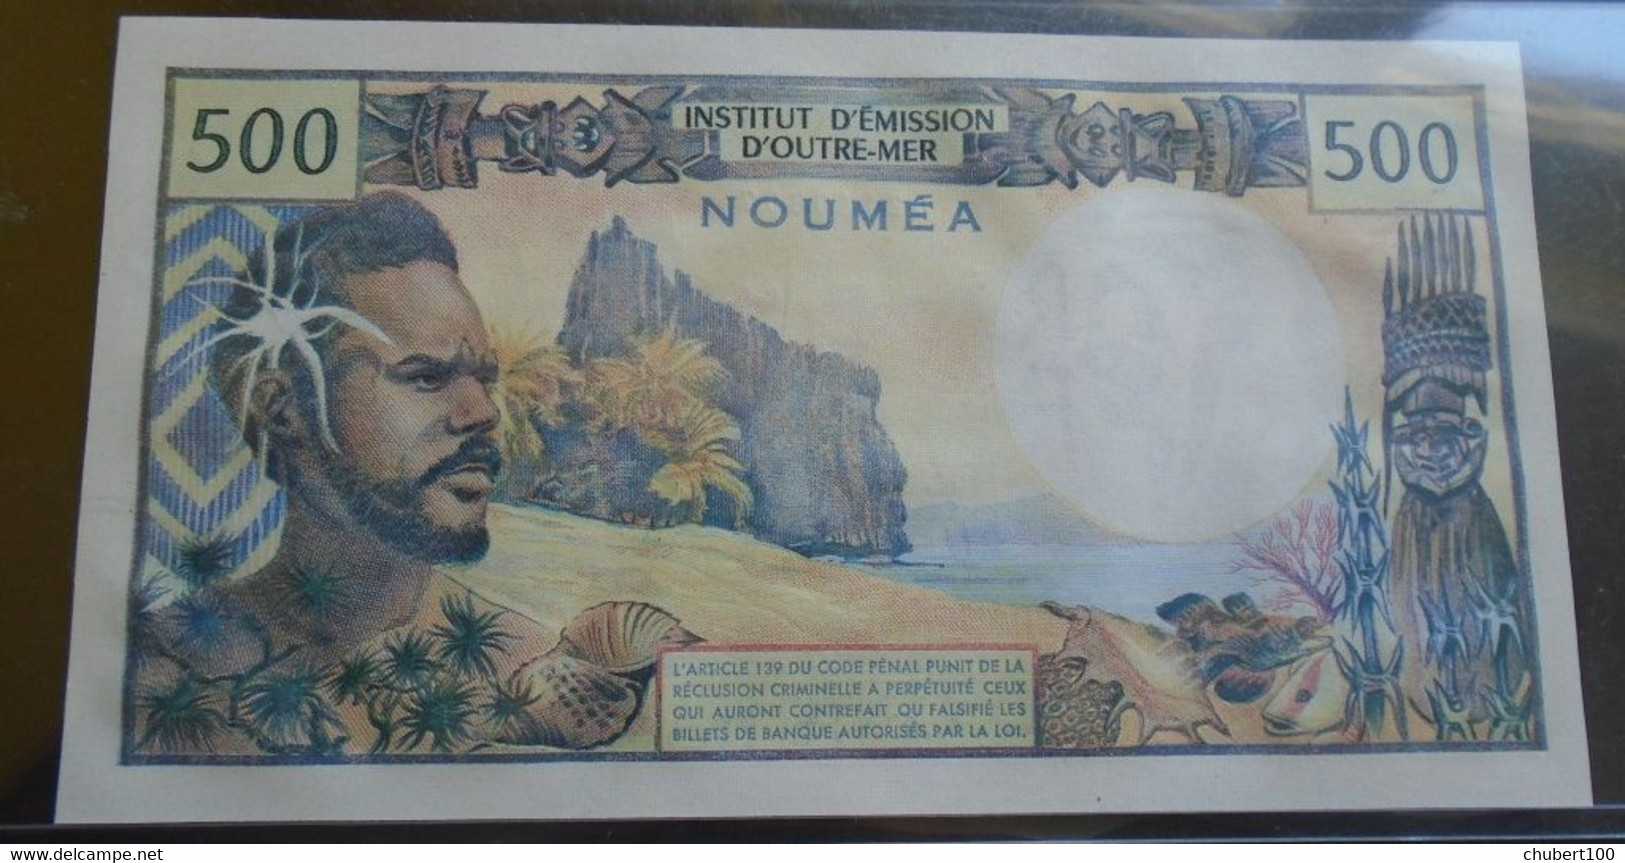 NEW CALEDONIA, P 60e ,  500 Francs ,  ND 1989 ,  UNC Neuf - Nouméa (Nieuw-Caledonië 1873-1985)